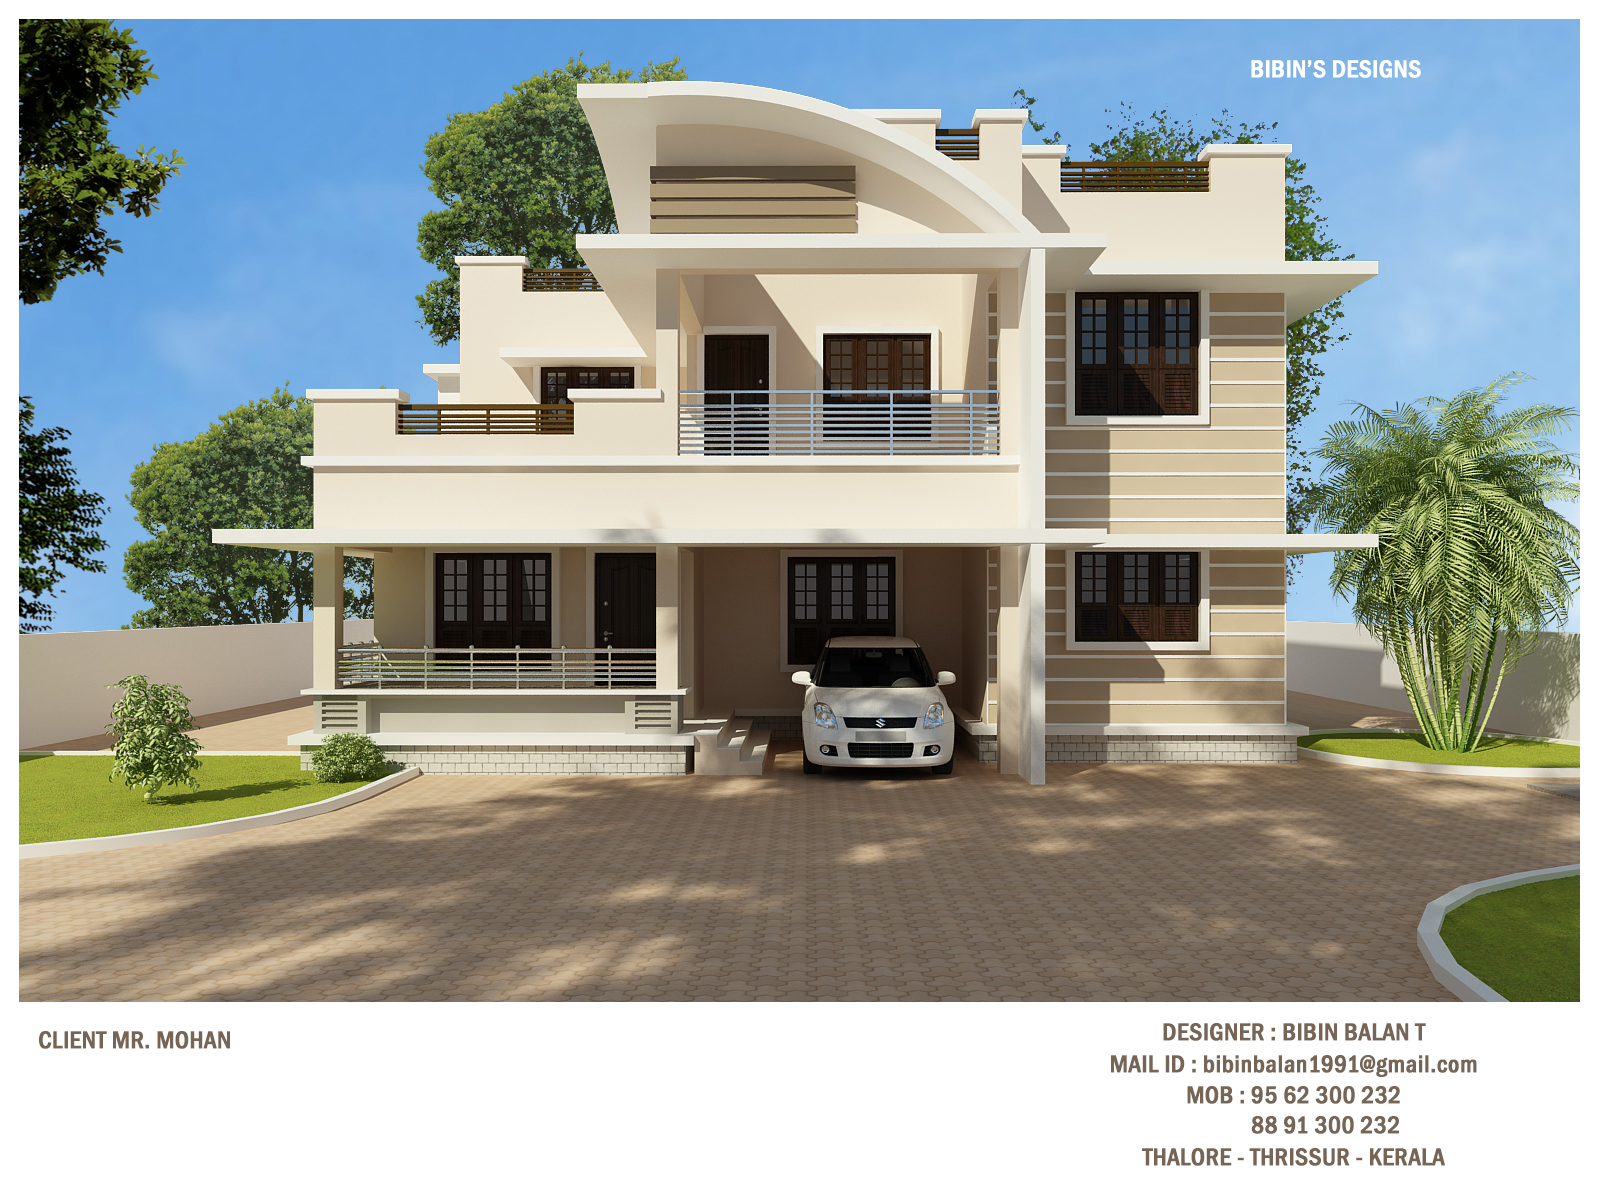  Verandah  House  Floor Plan  Designs  ideas Kerala homes 